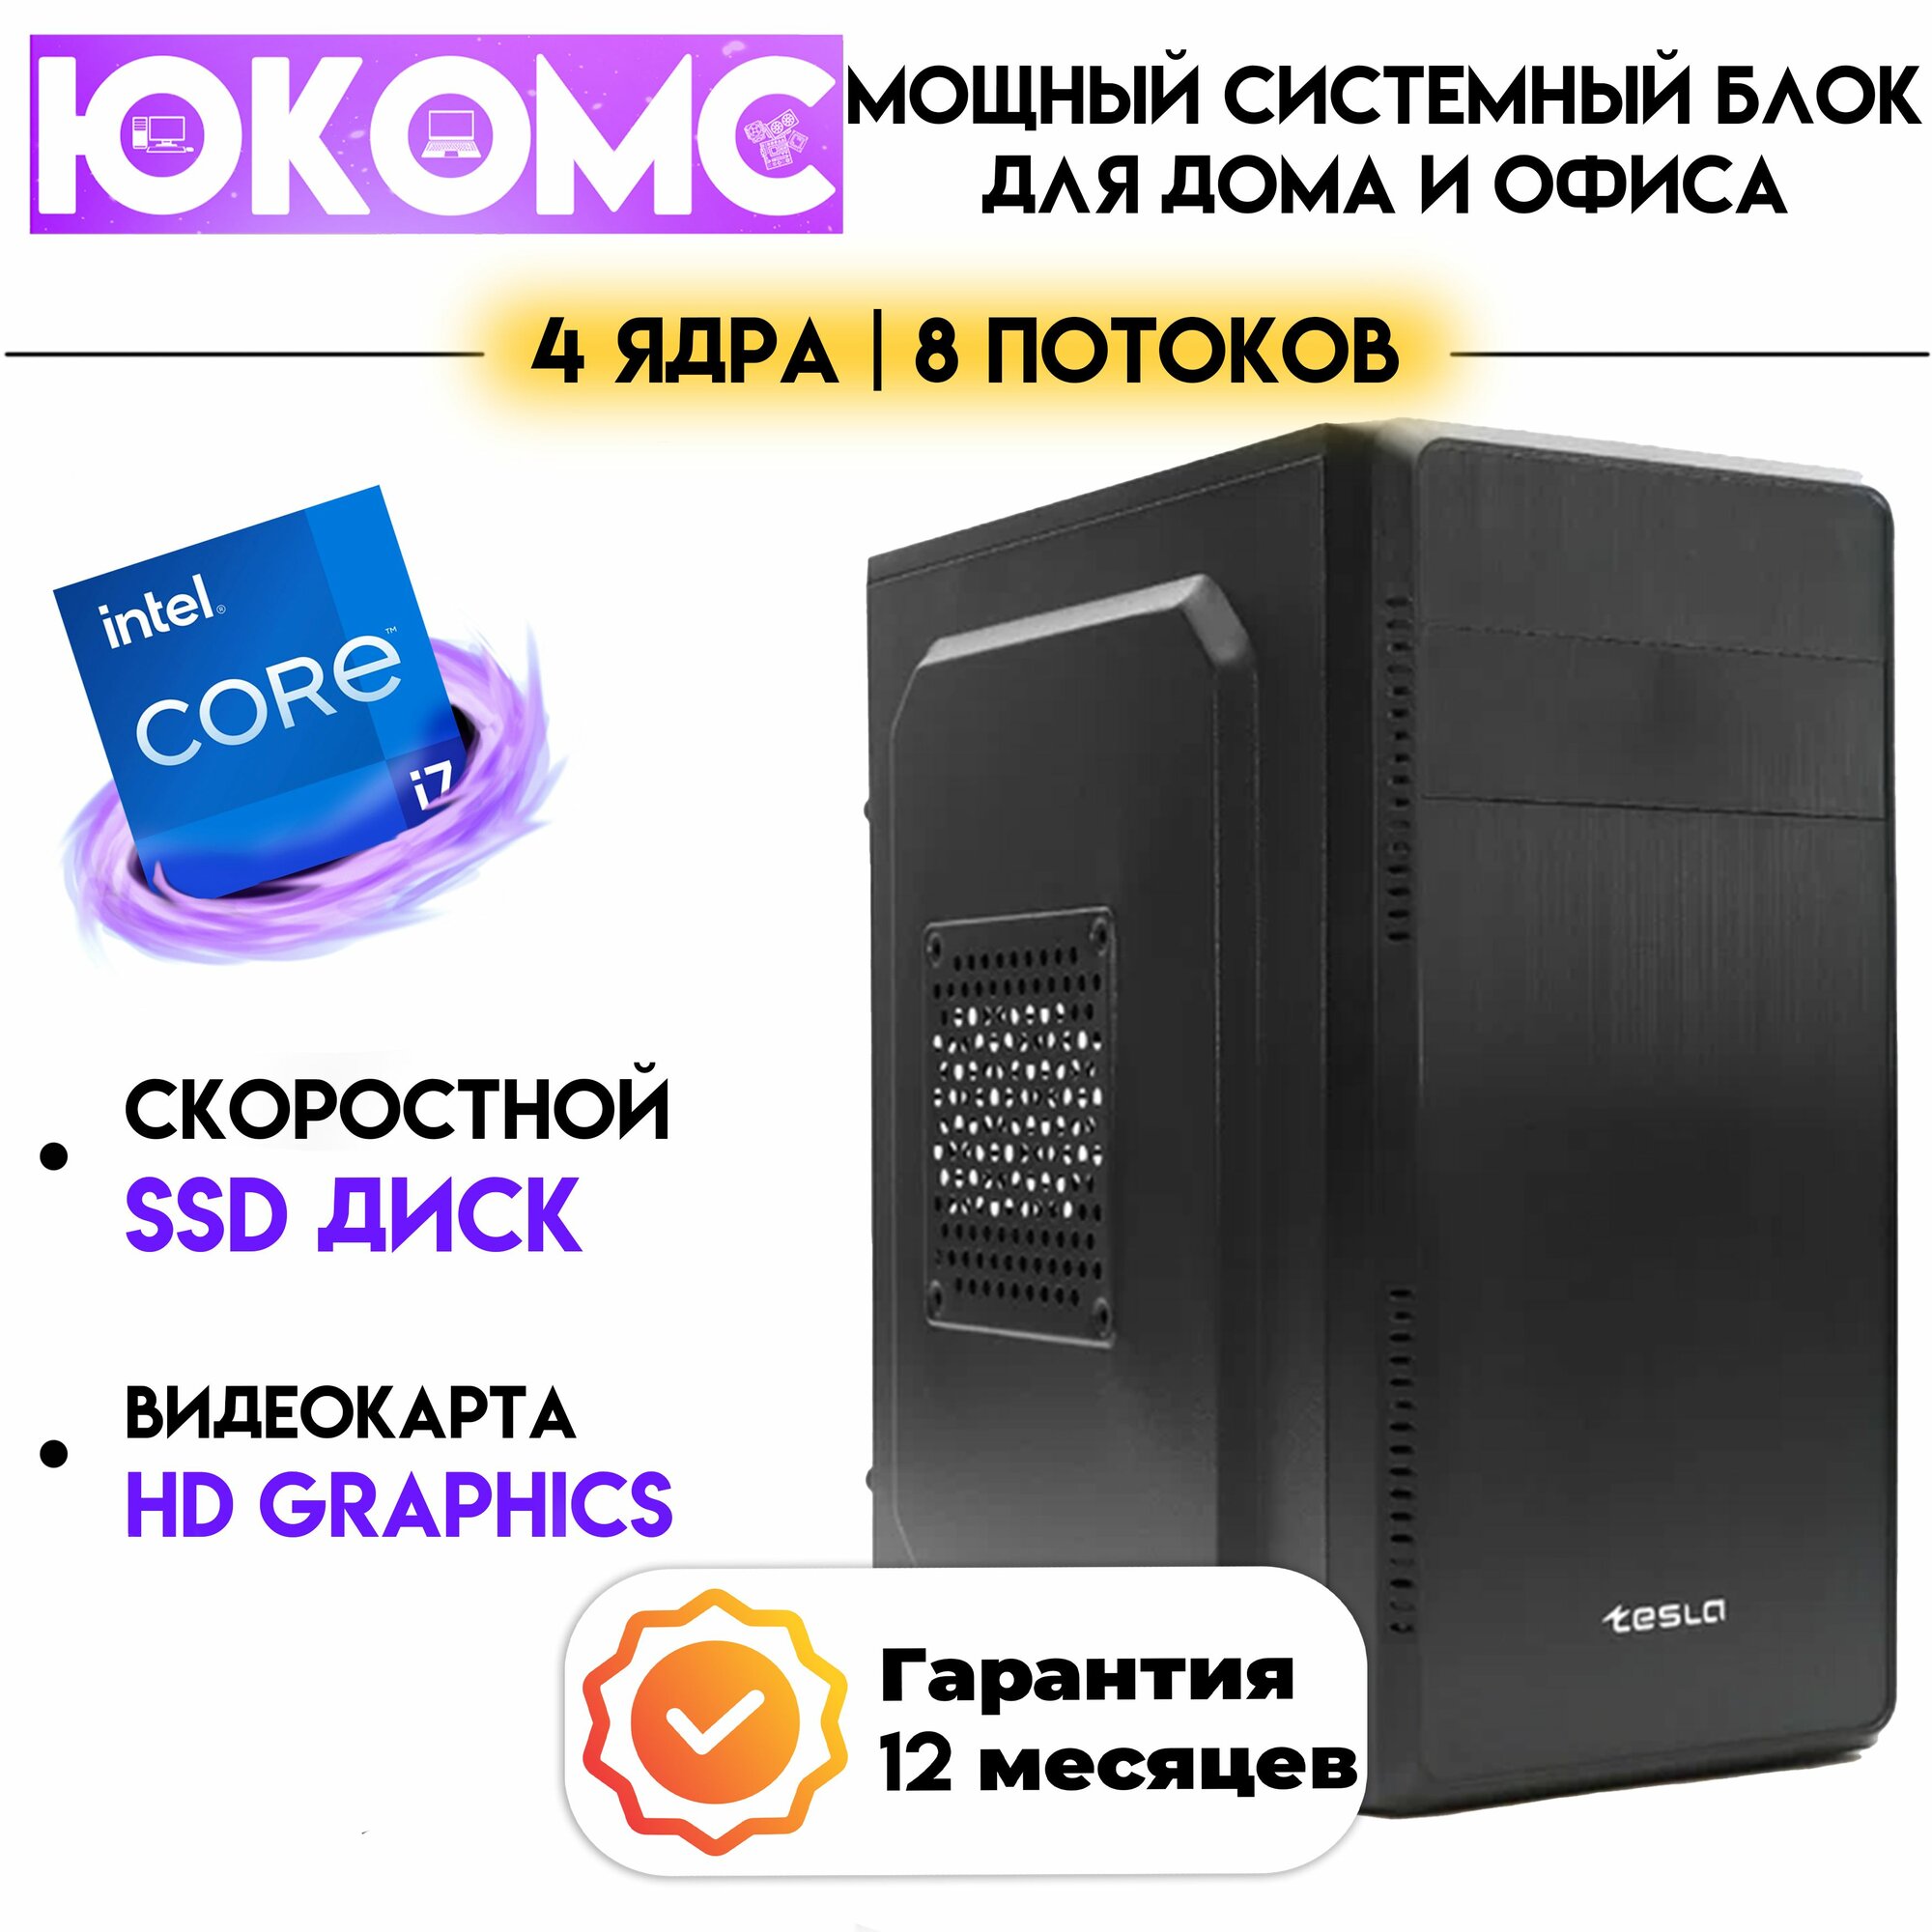 PC юкомс Core i7 3770, SSD 120GB, 8GB DDR3, БП 350W, win 10 pro, Classic black